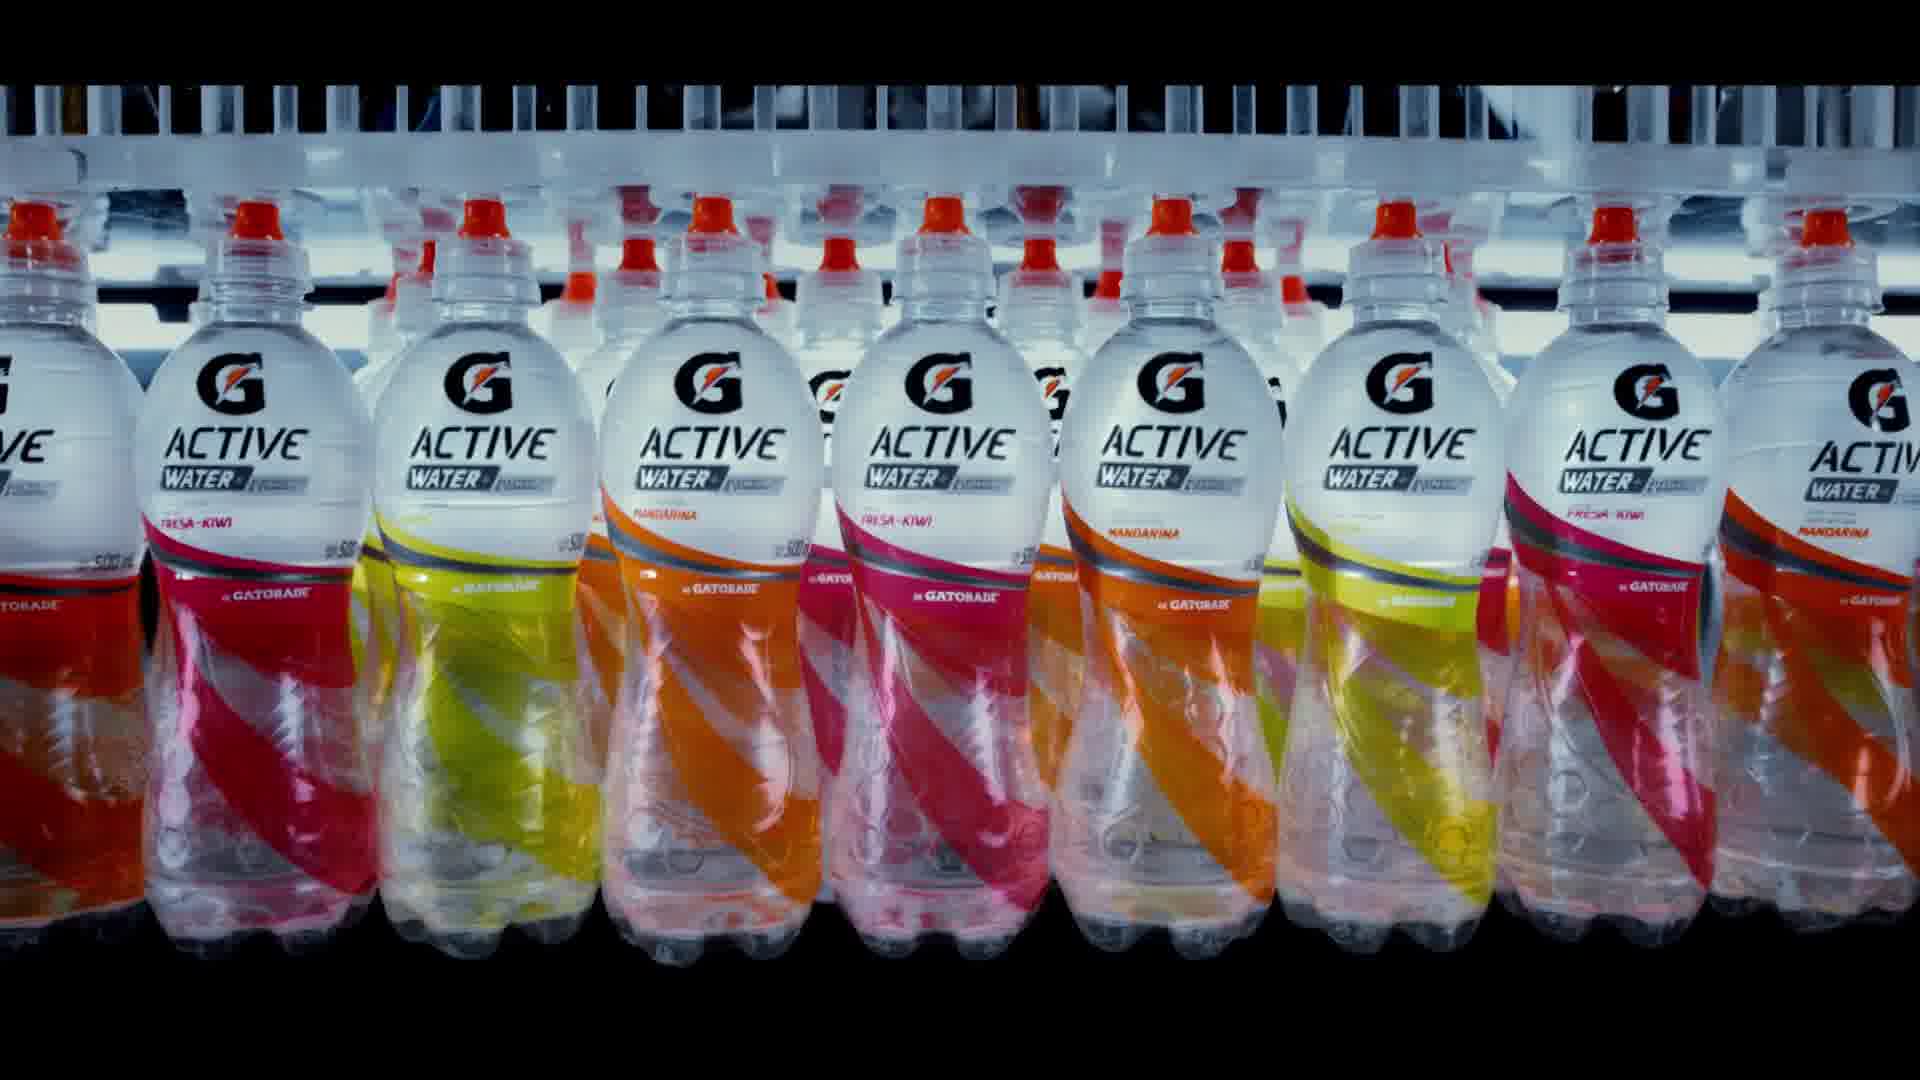 Gatorade - G-Active Water Made Active